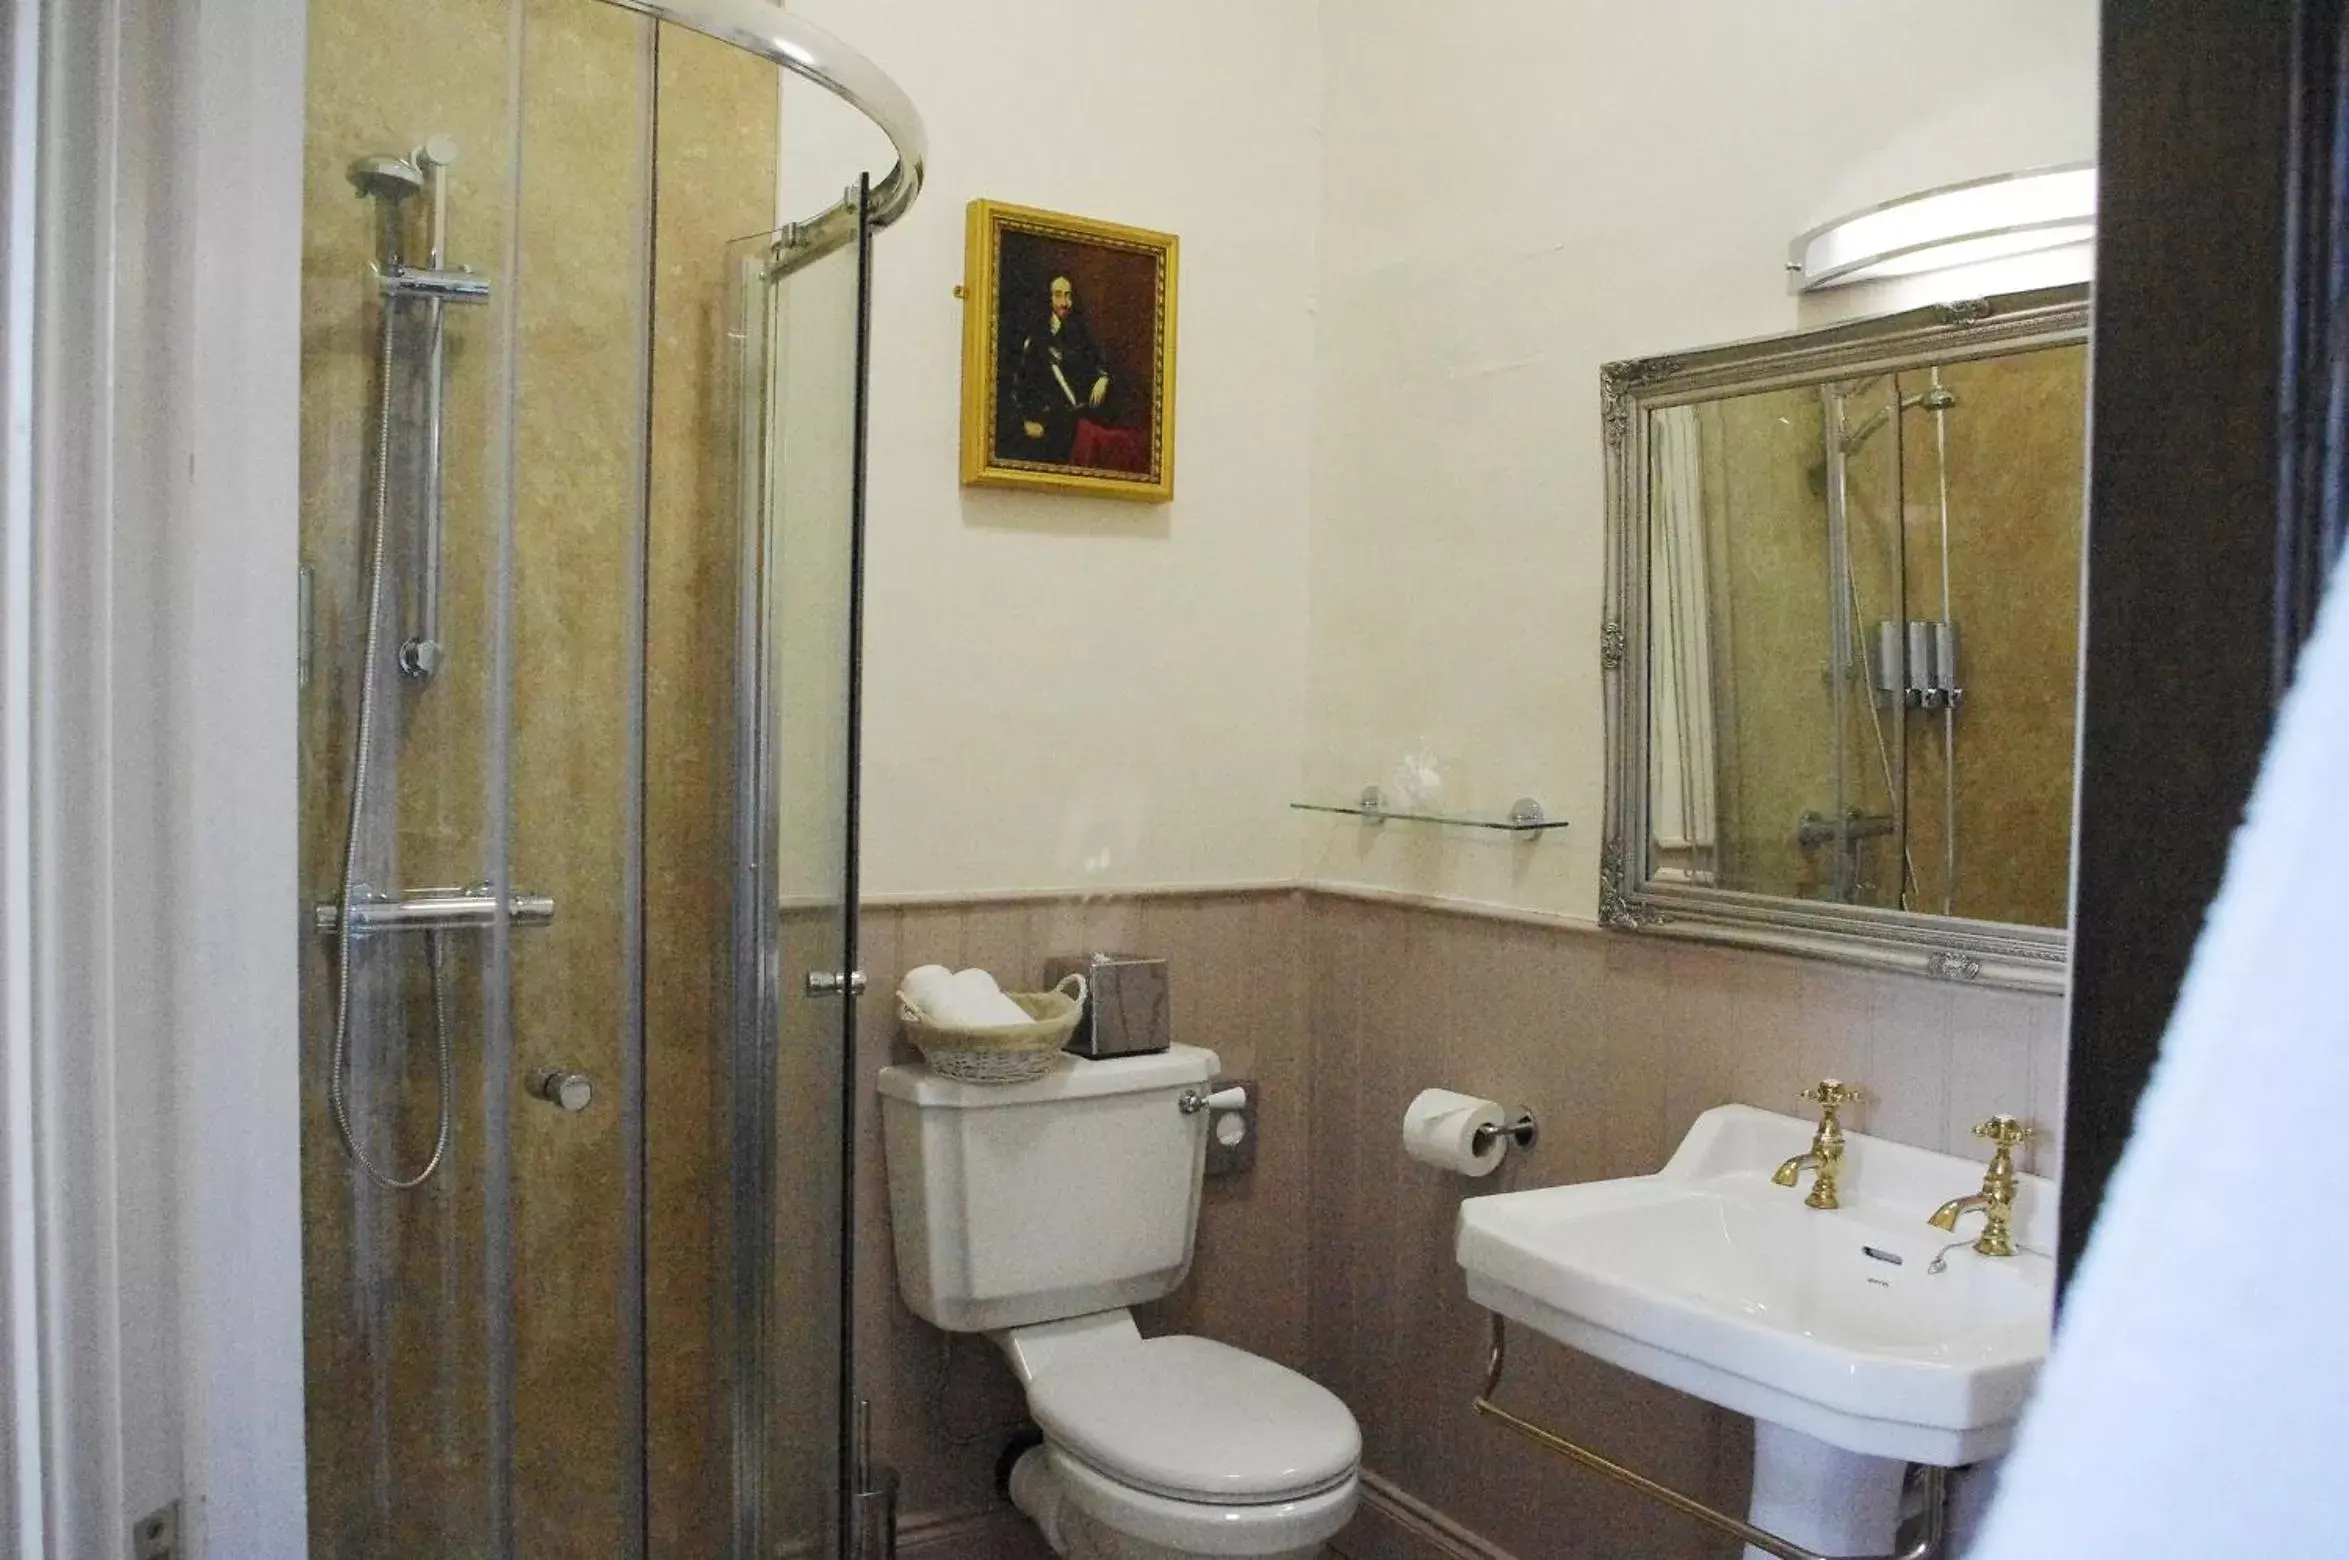 Bathroom in Appleby Castle